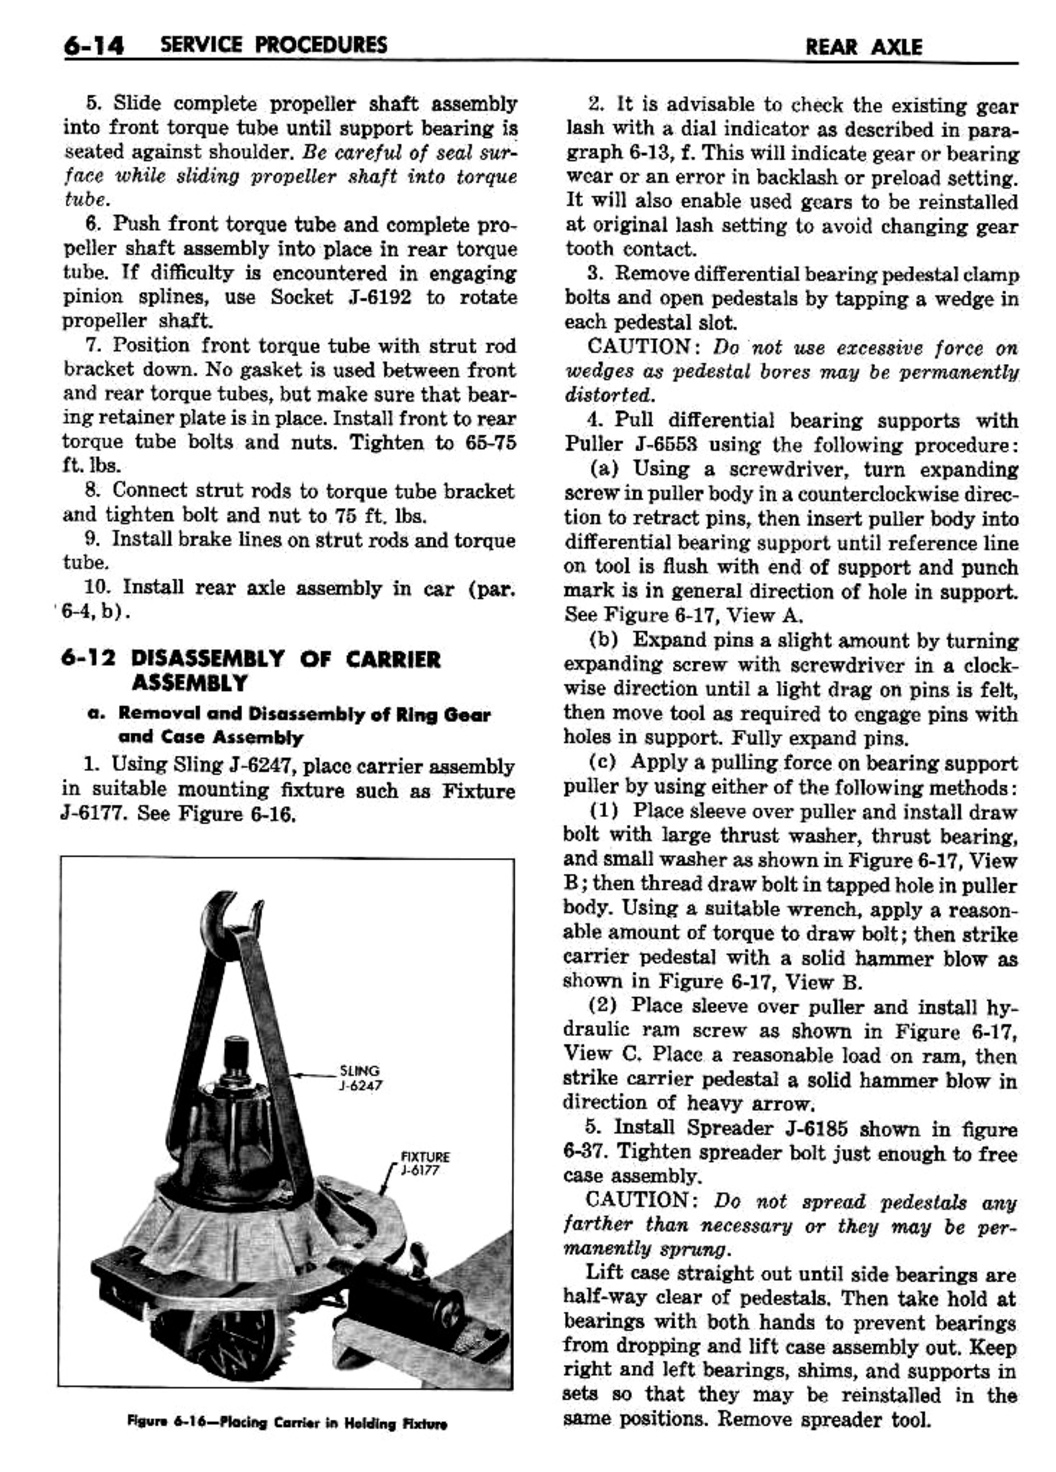 n_07 1960 Buick Shop Manual - Rear Axle-014-014.jpg